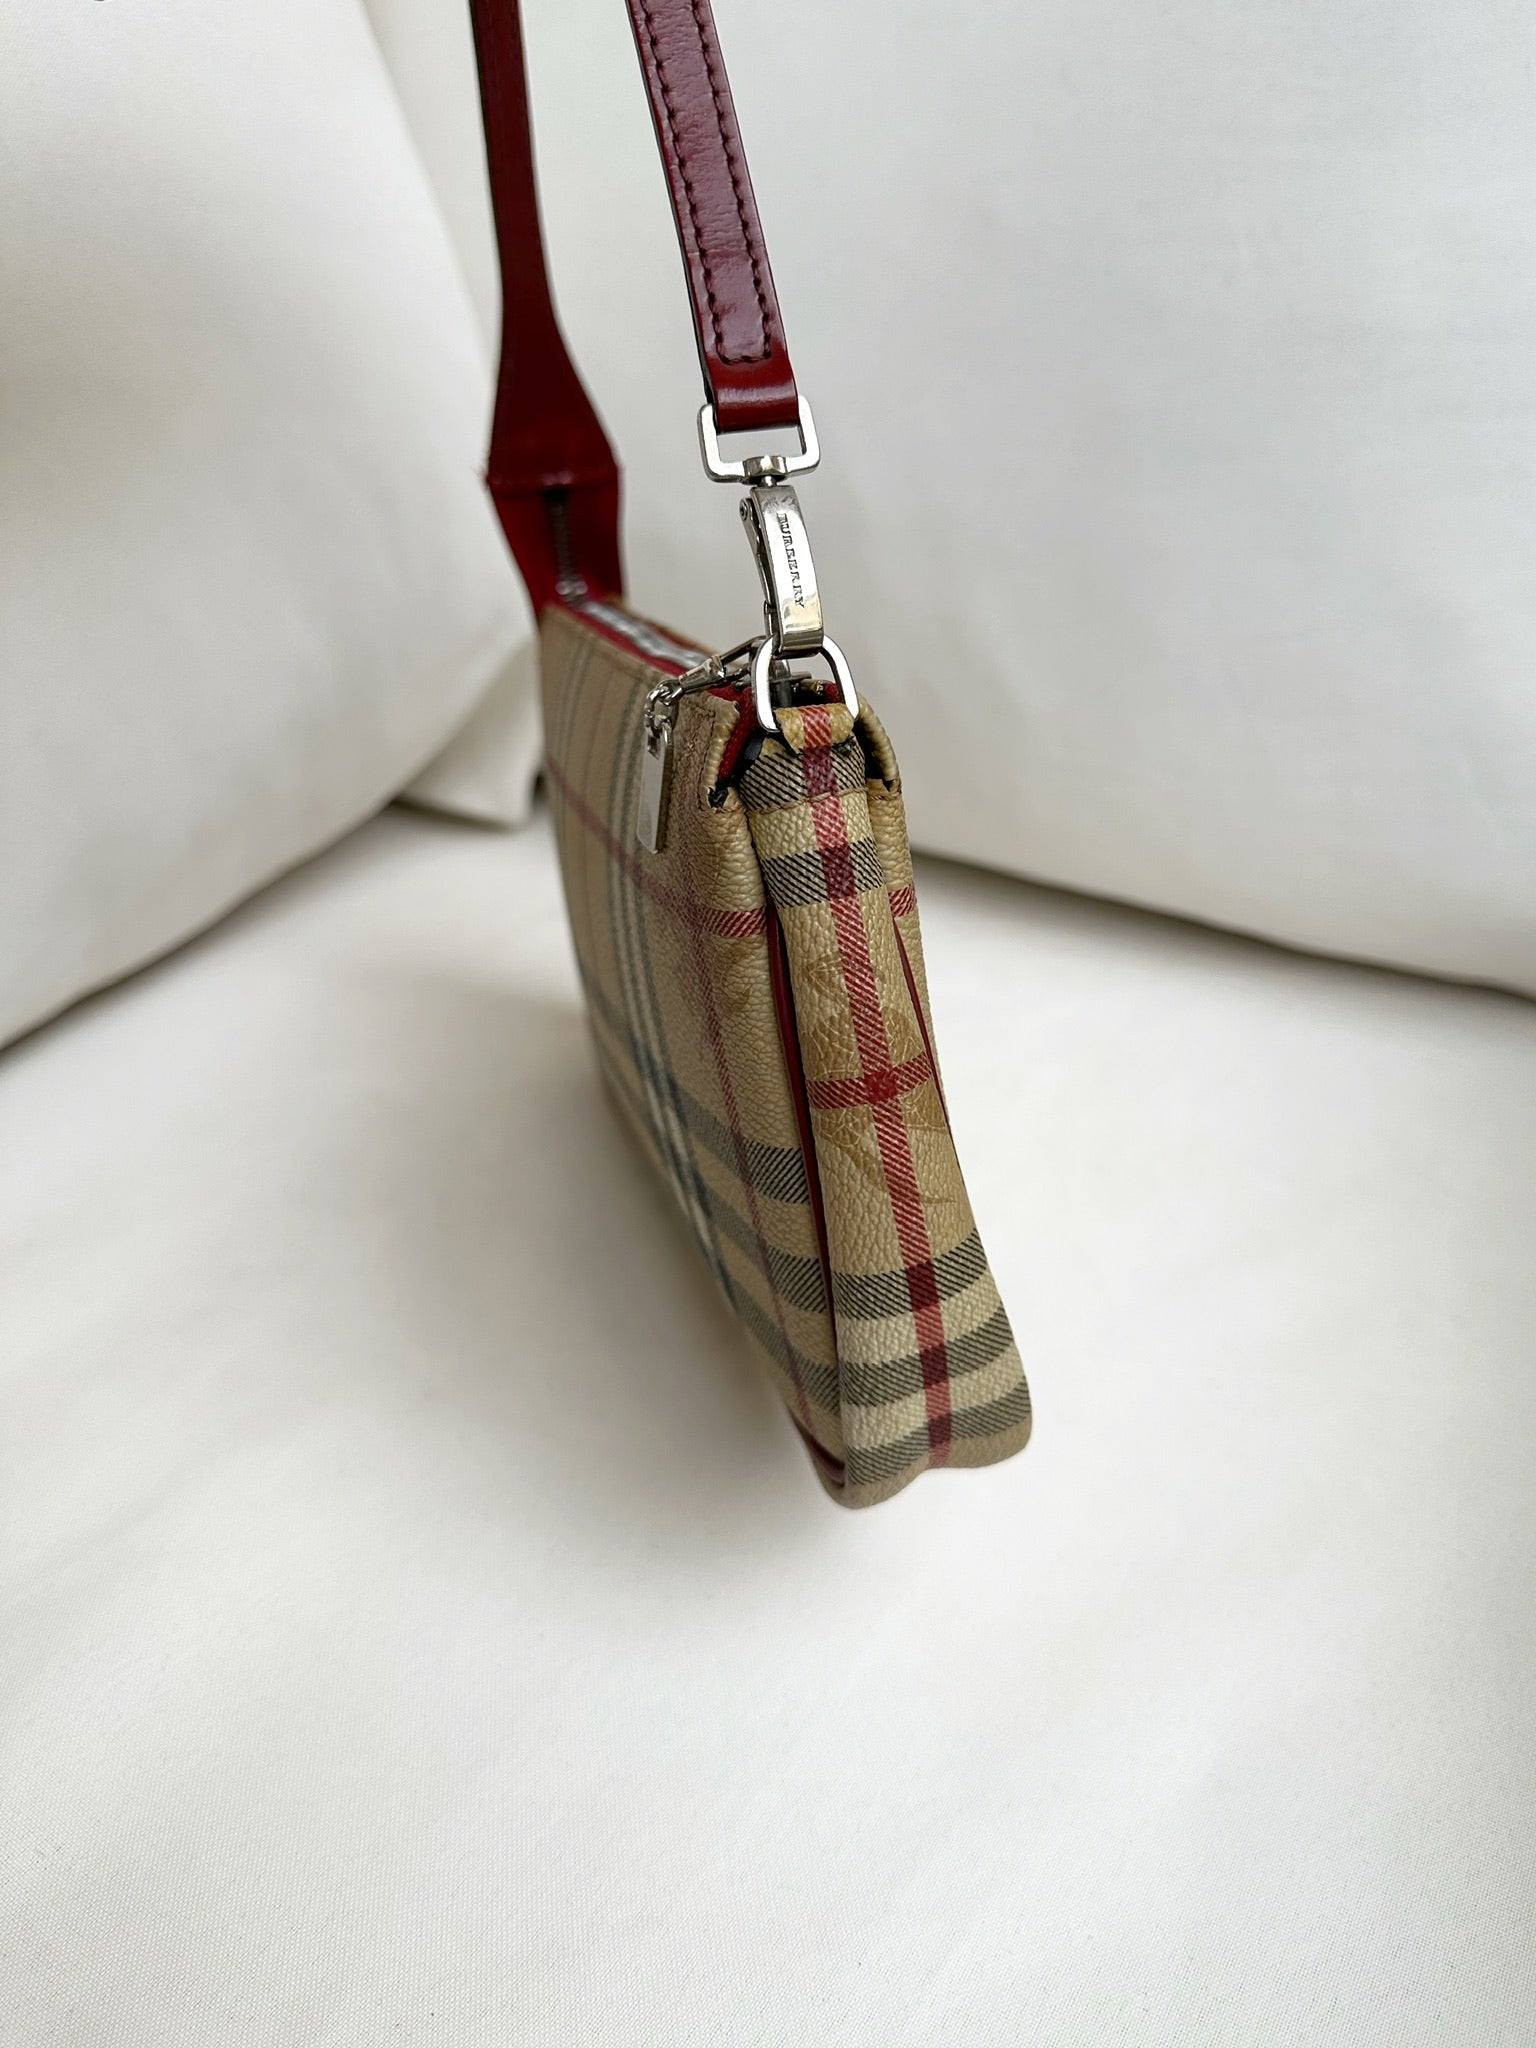 Vintage Burberry pochette handbag, Nova check - Ruby Lane